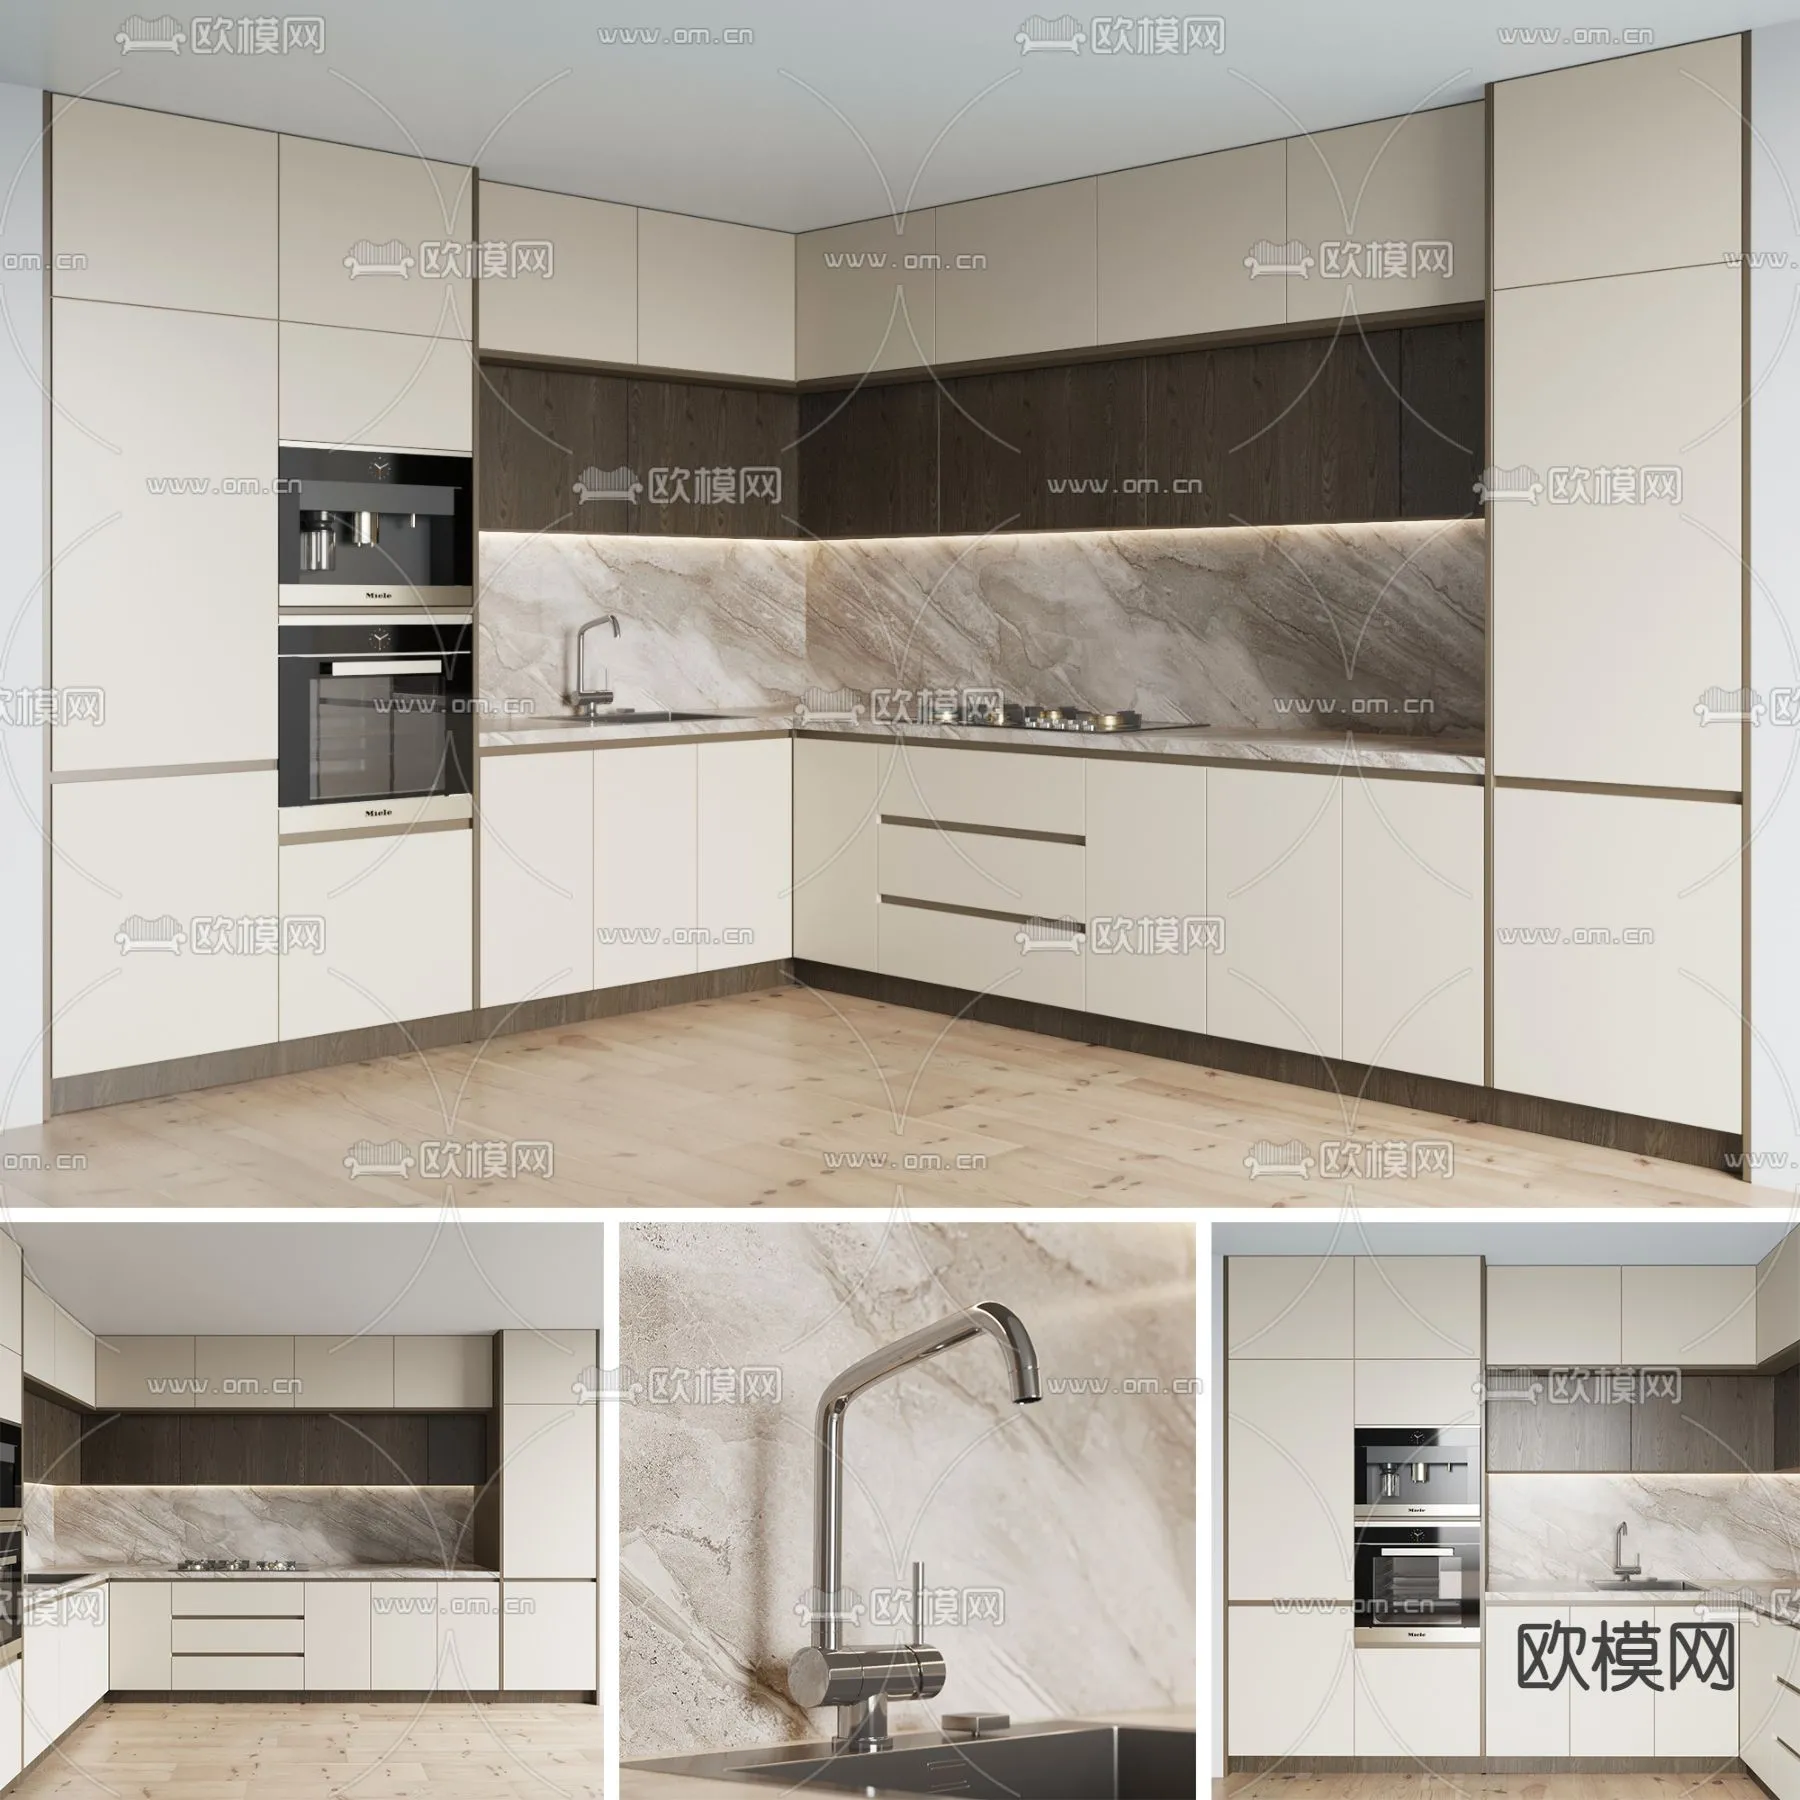 Kitchen 3D Scenes – 1078